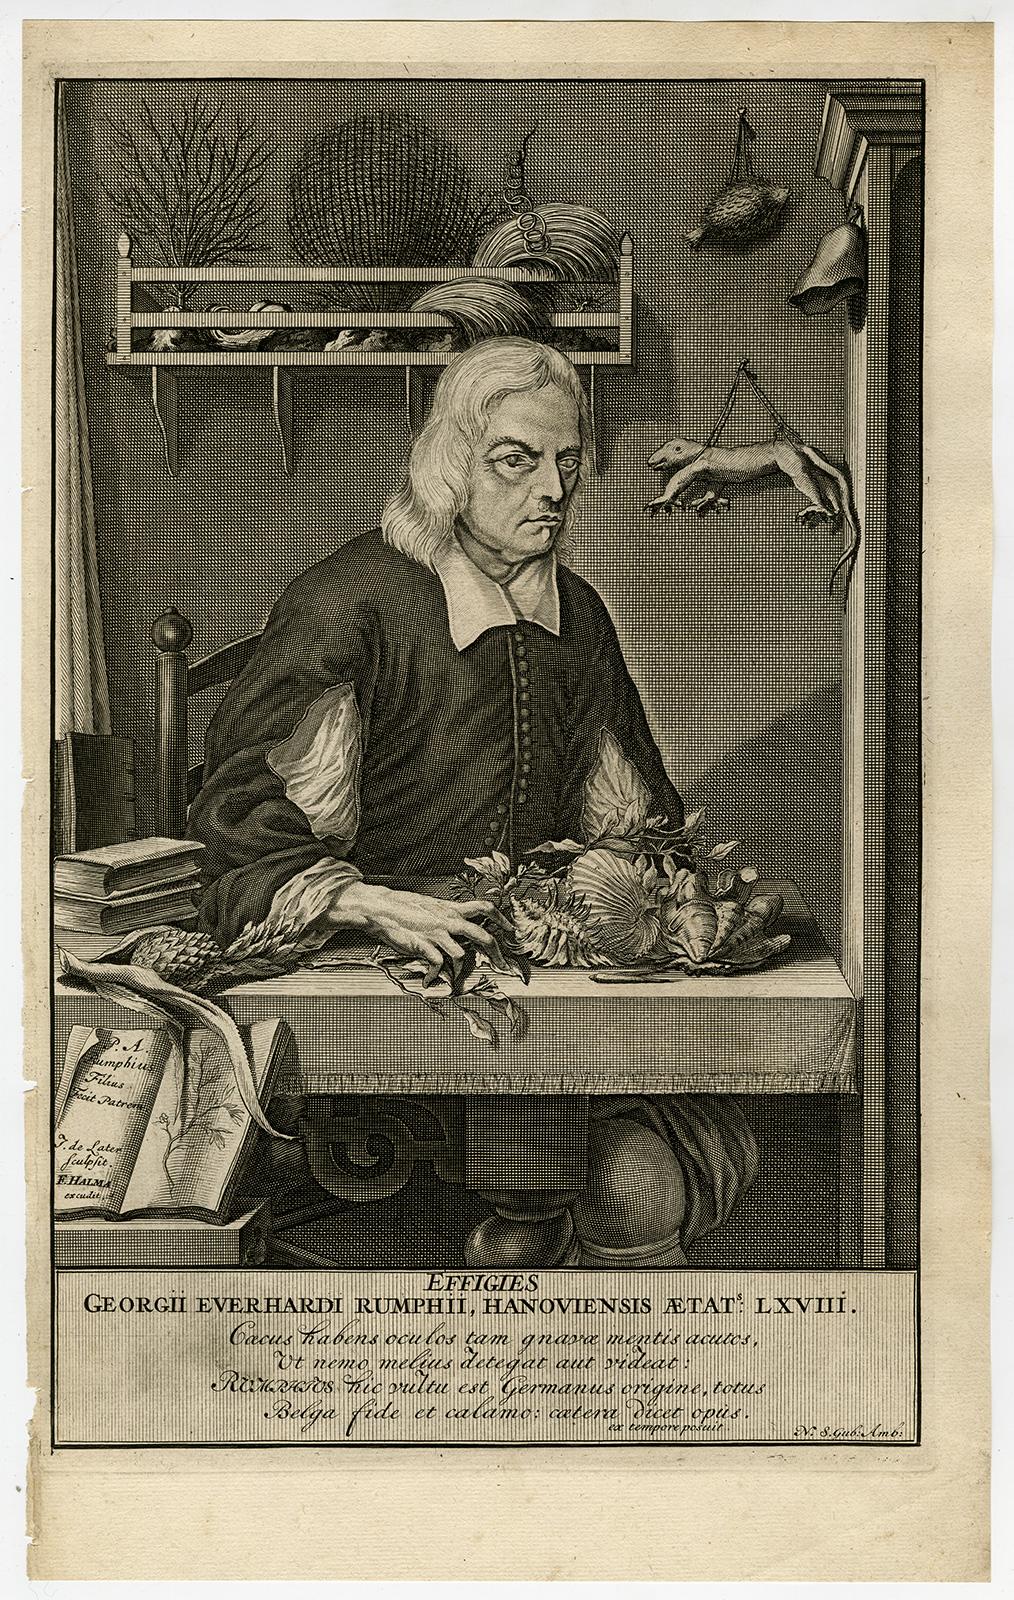 Jorg Eberhardt Rumph Portrait Print - Portrait from Ambonian Cabinet of Curiosities by Rumphius - Engraving - 18th c.